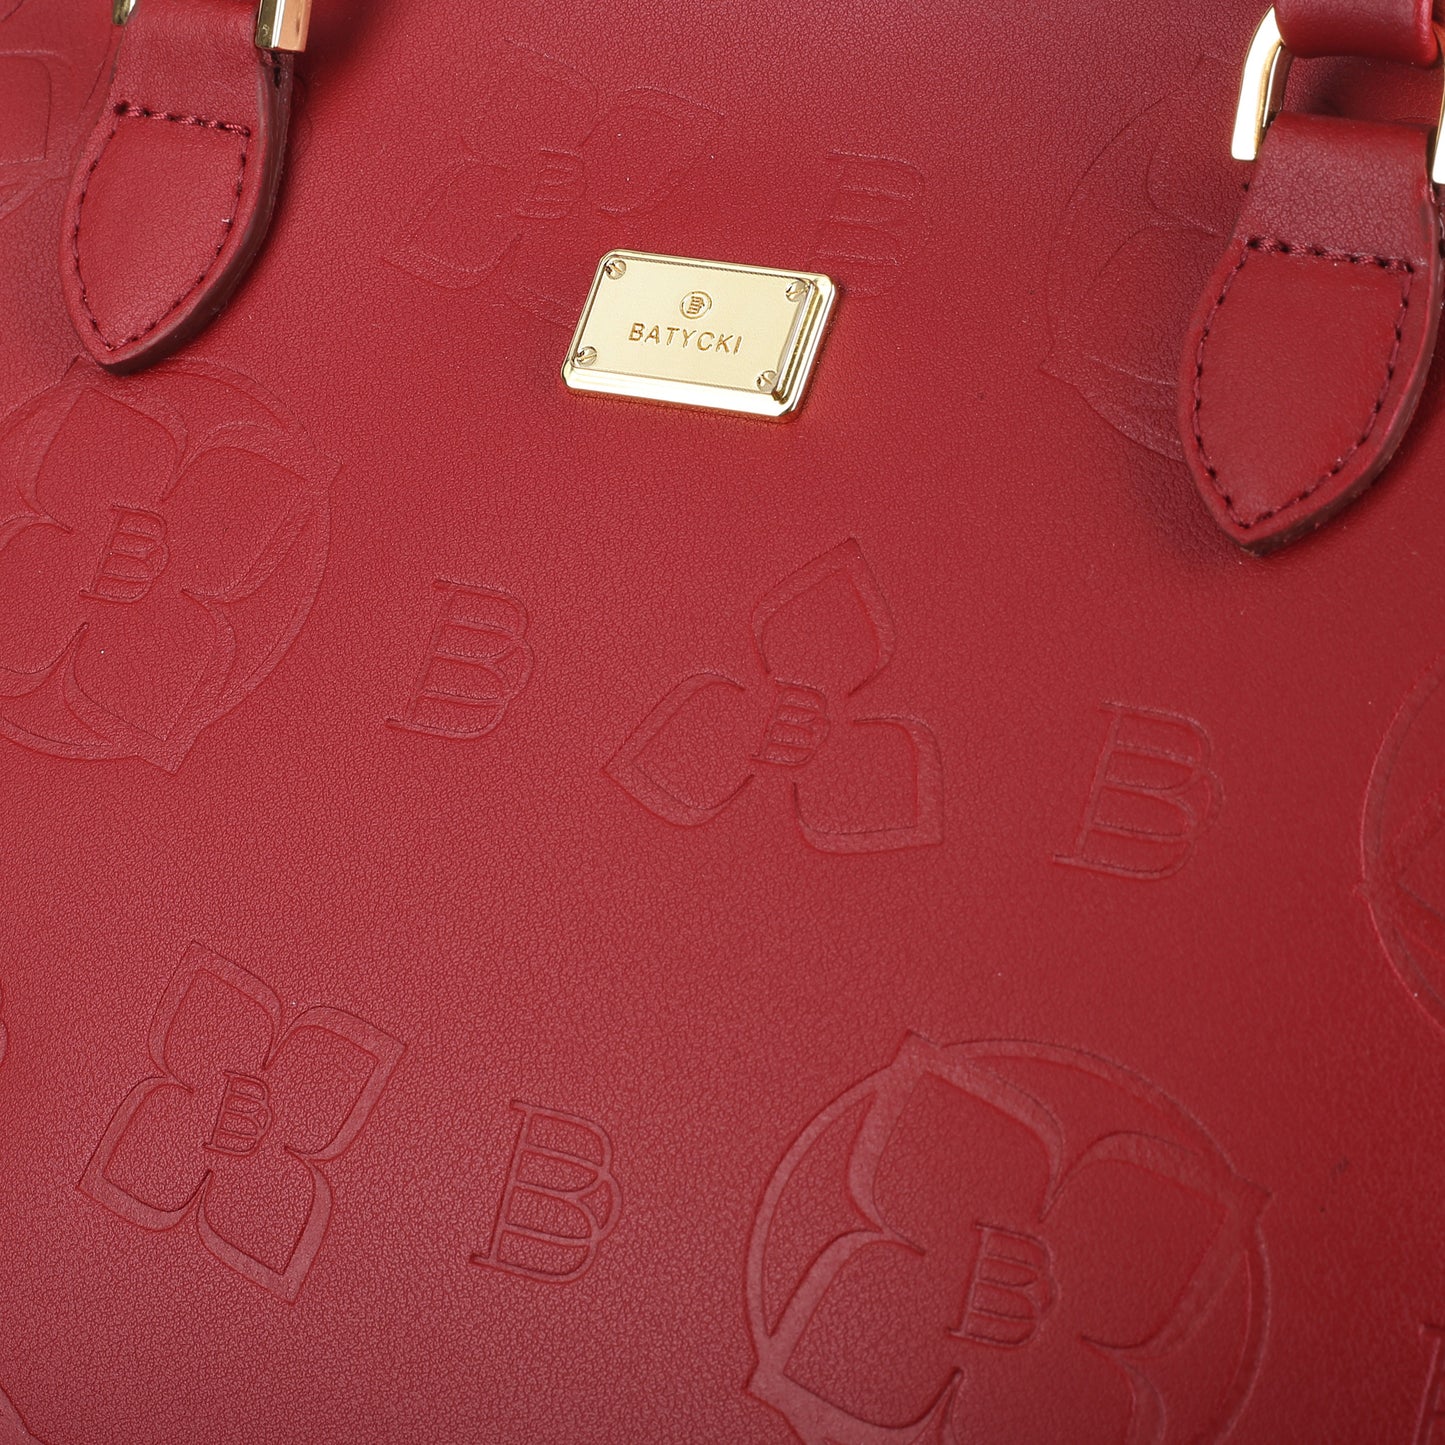 STAMPIA S NAPA CLARET women's leather handbag